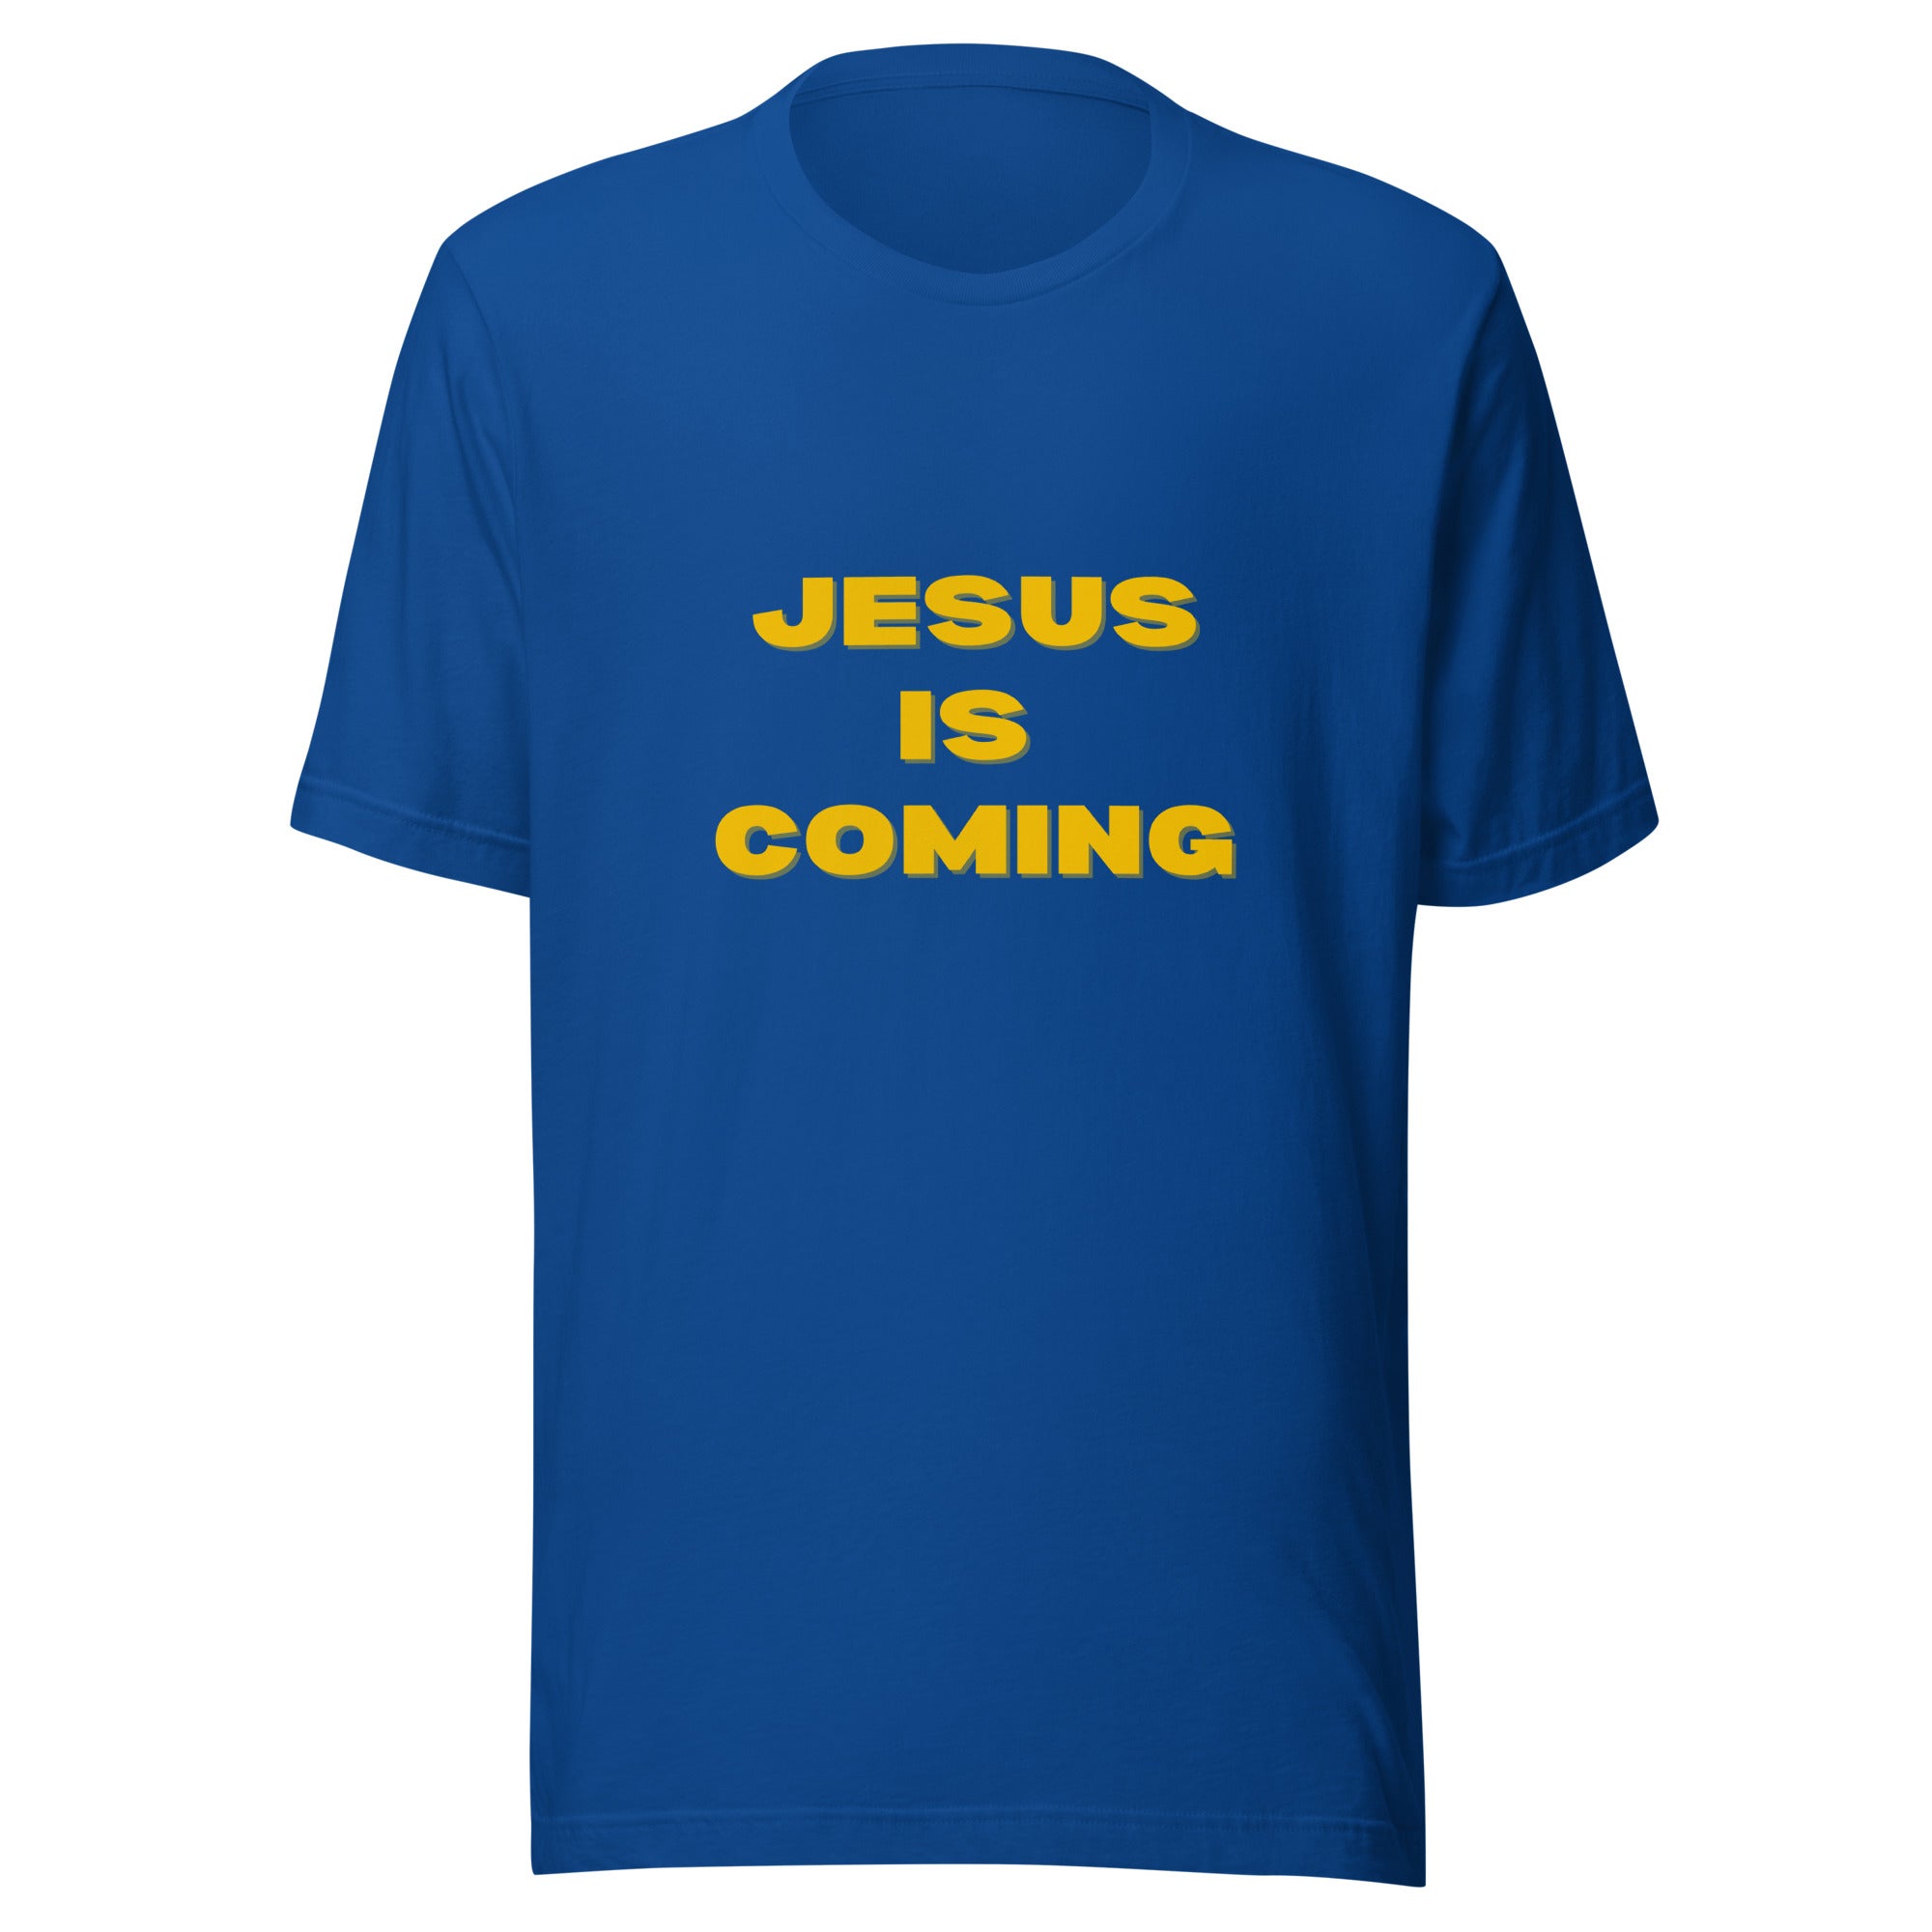 JESUS IS COMING Unisex t-shirt